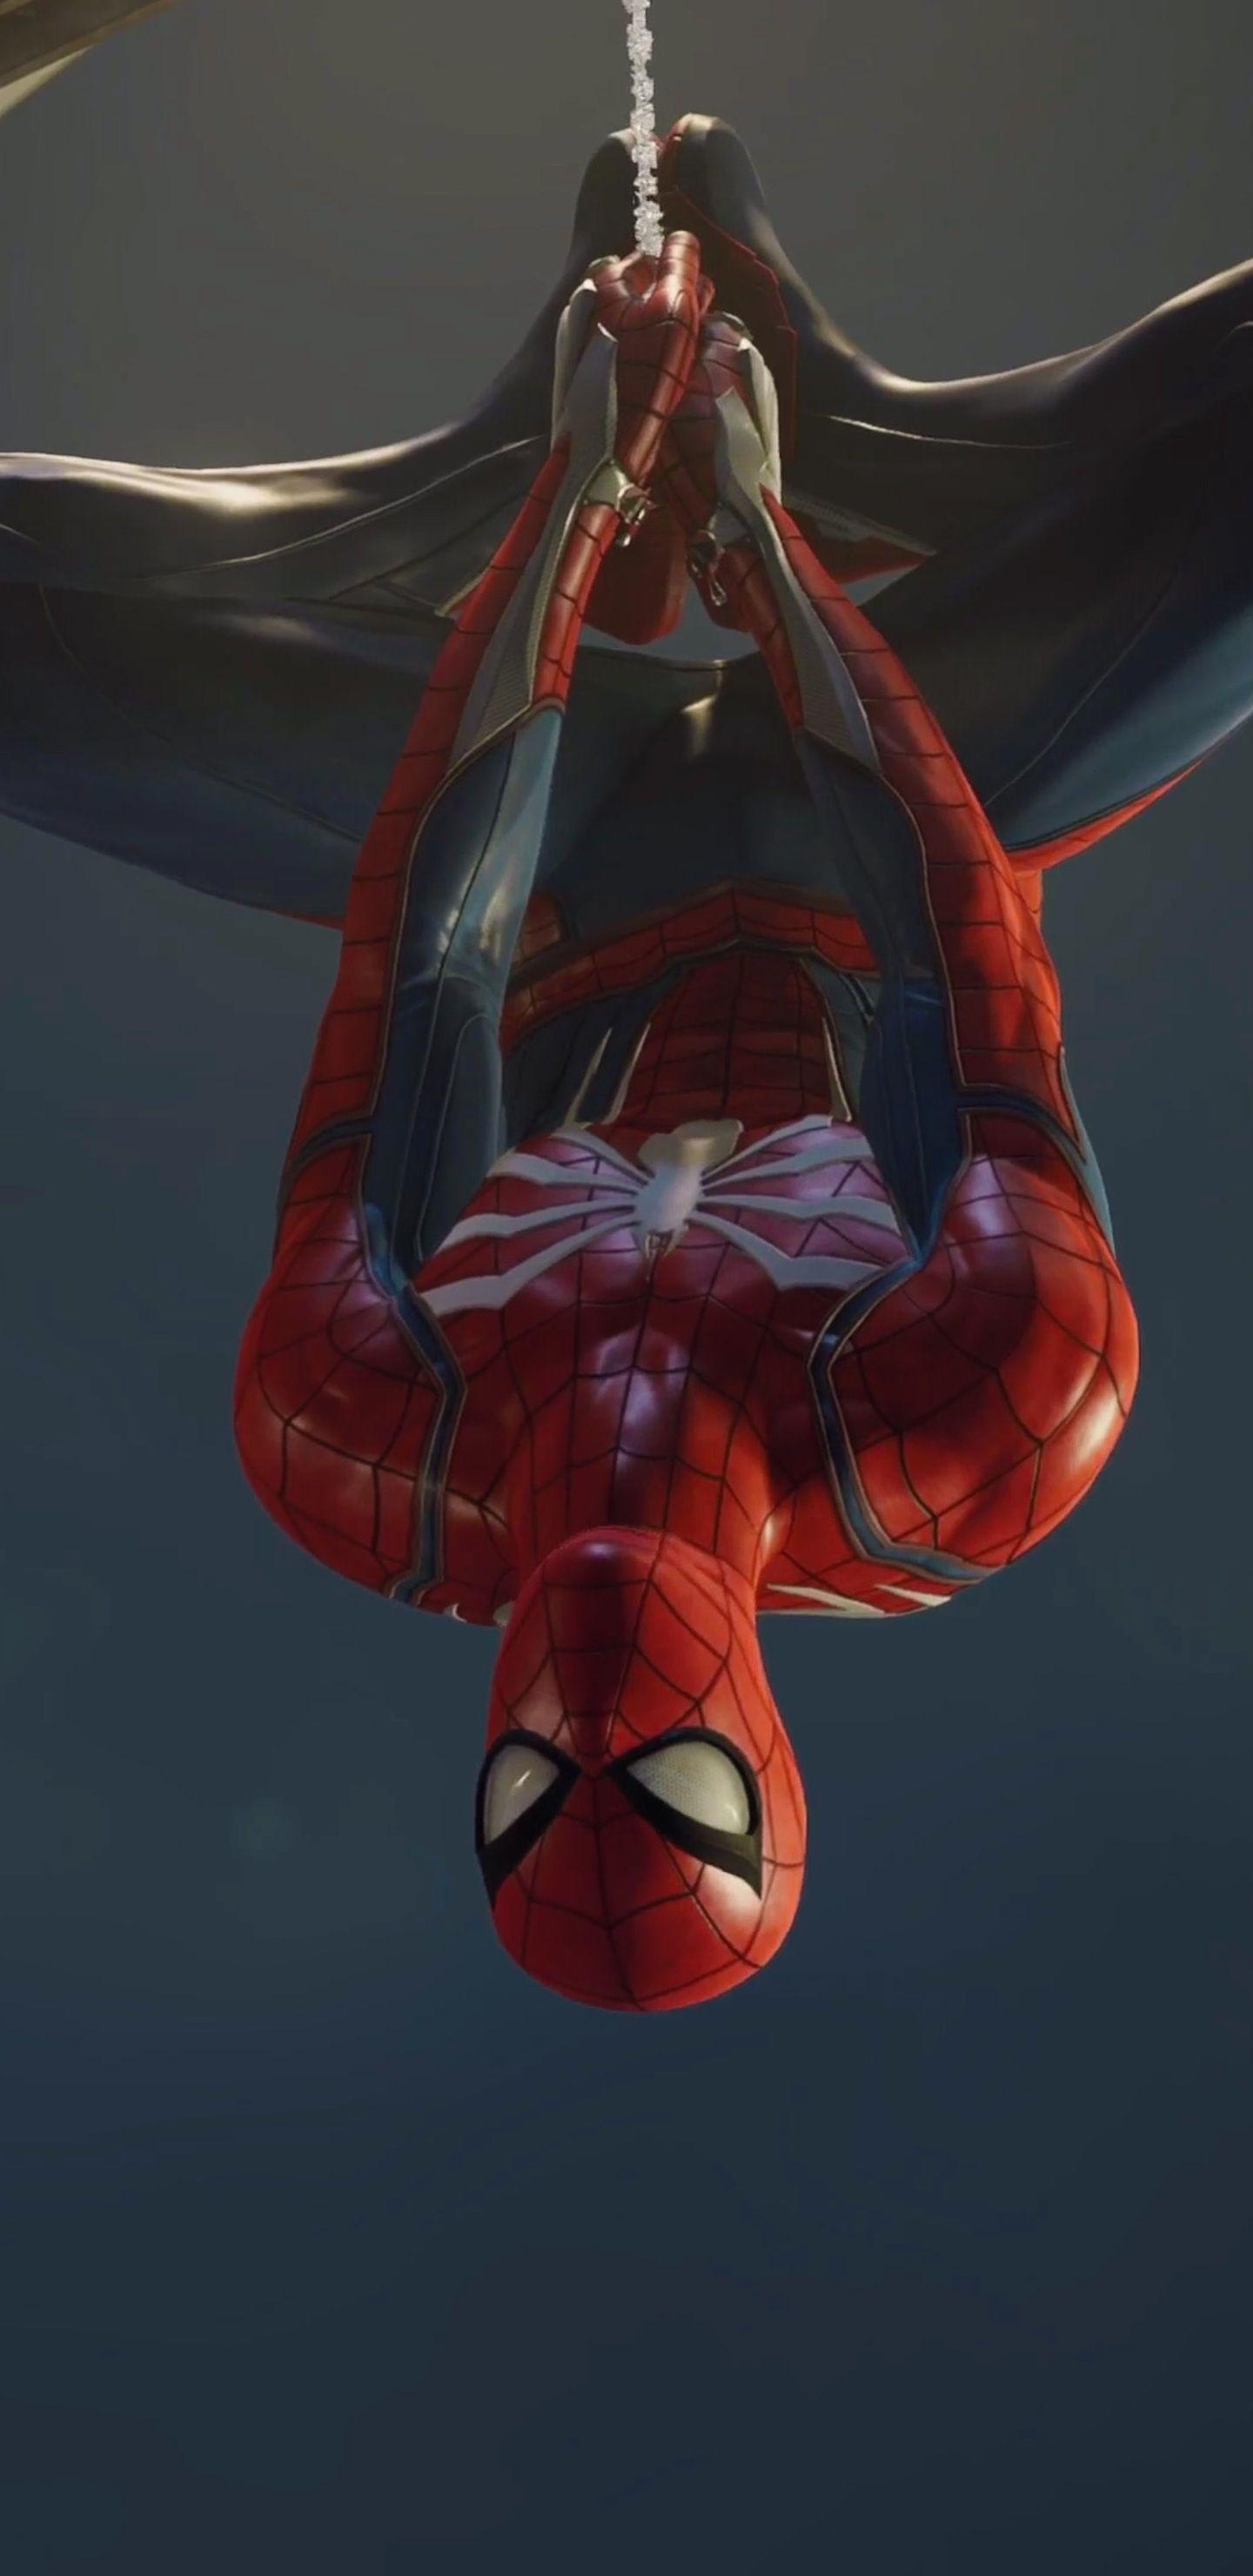 Image Spiderman PS4 Wallpaper: 18.5:9